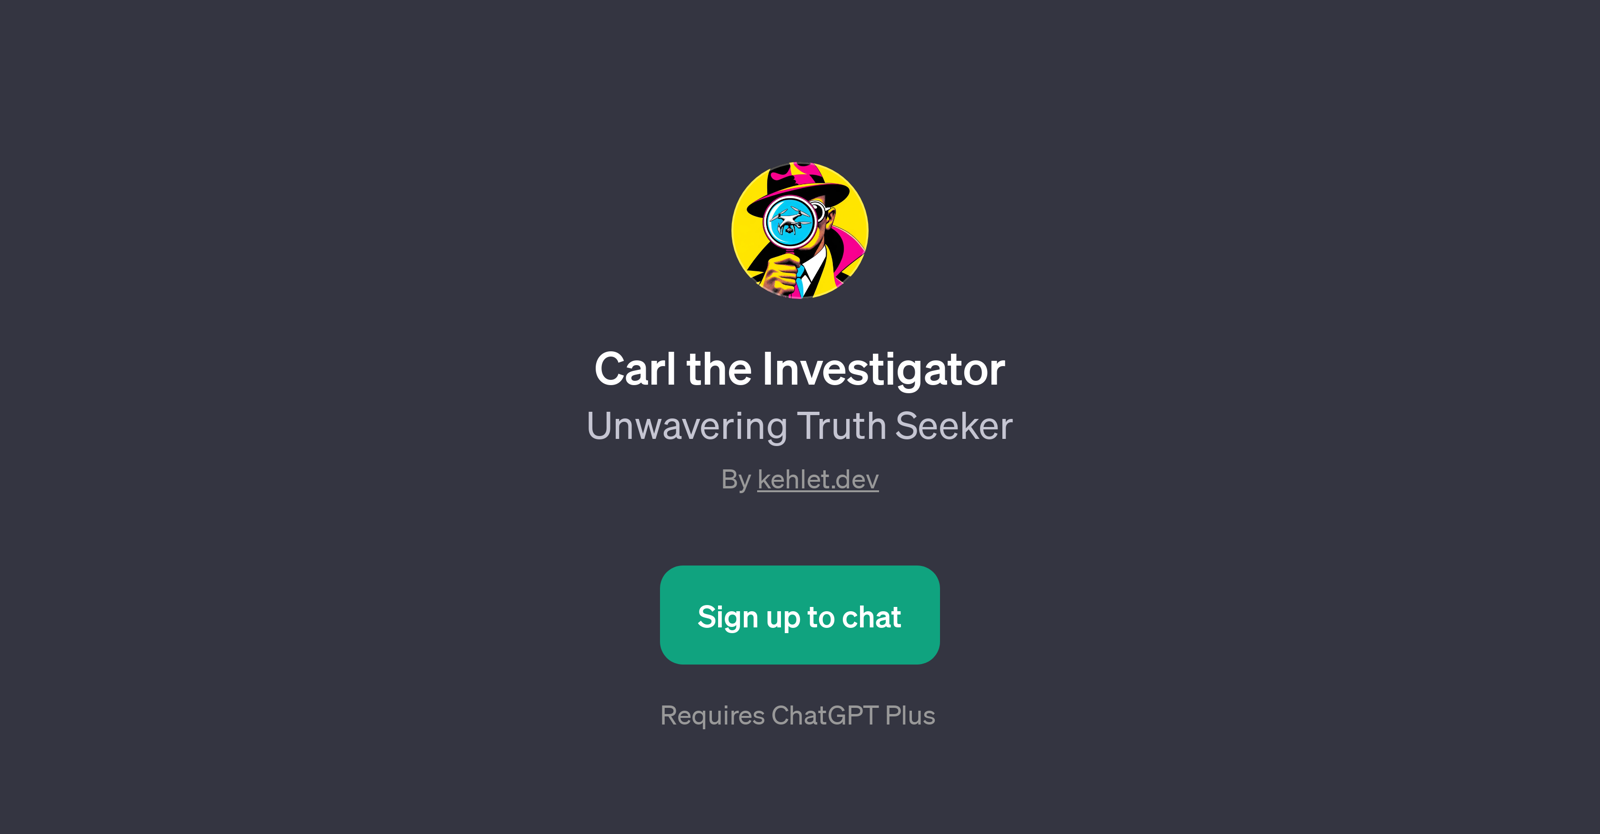 Carl the Investigator website